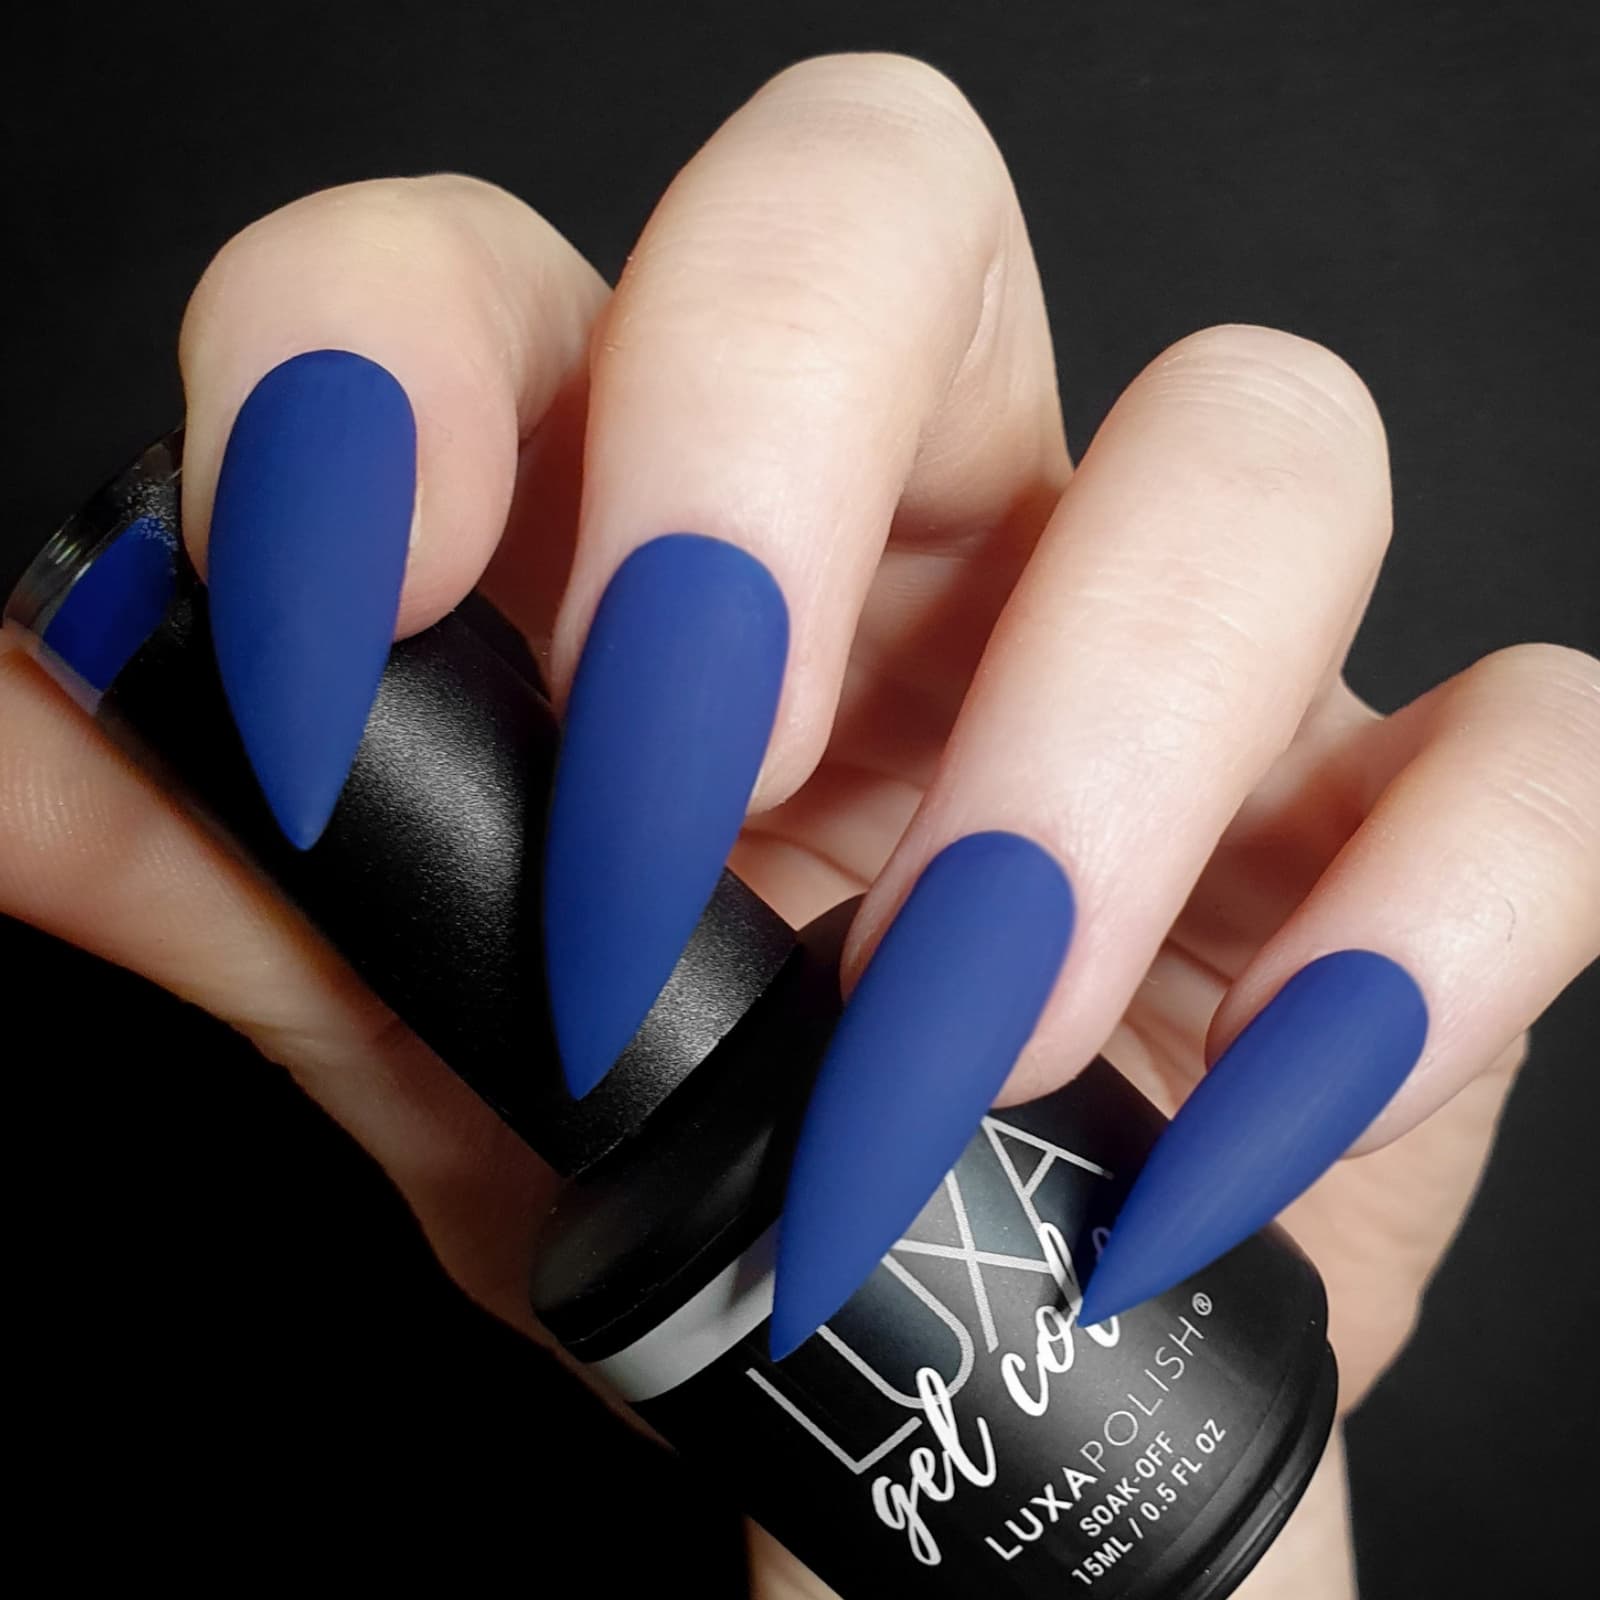 Luxapolish Fancy a Blue?